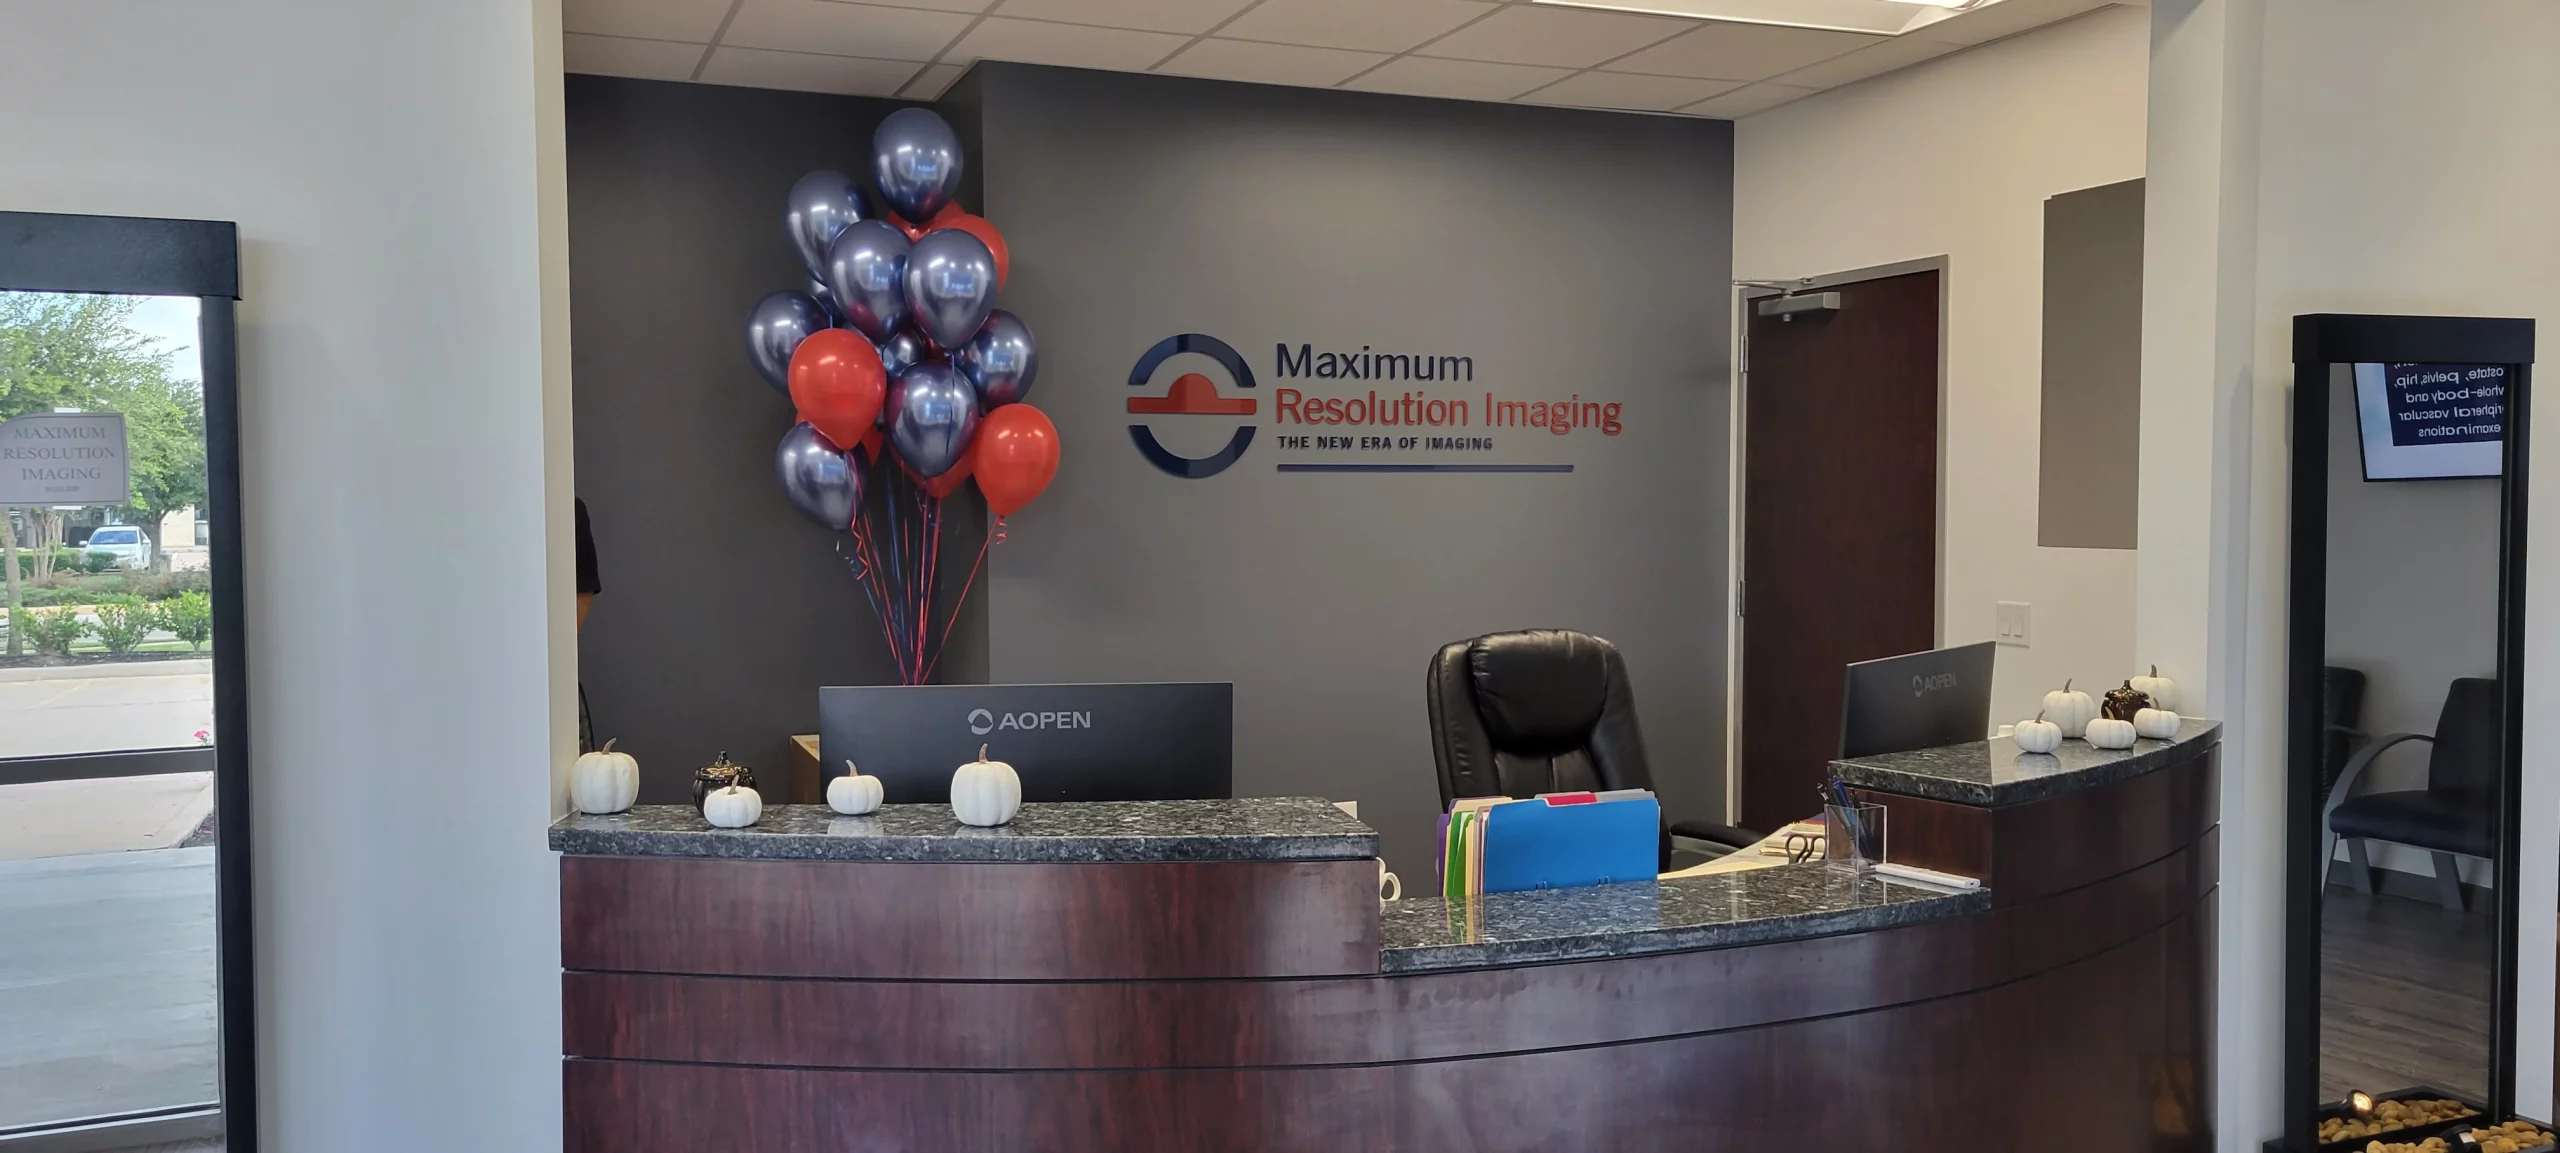 Maximum Resolution Imaging Center Richmond Texas - Front Desk